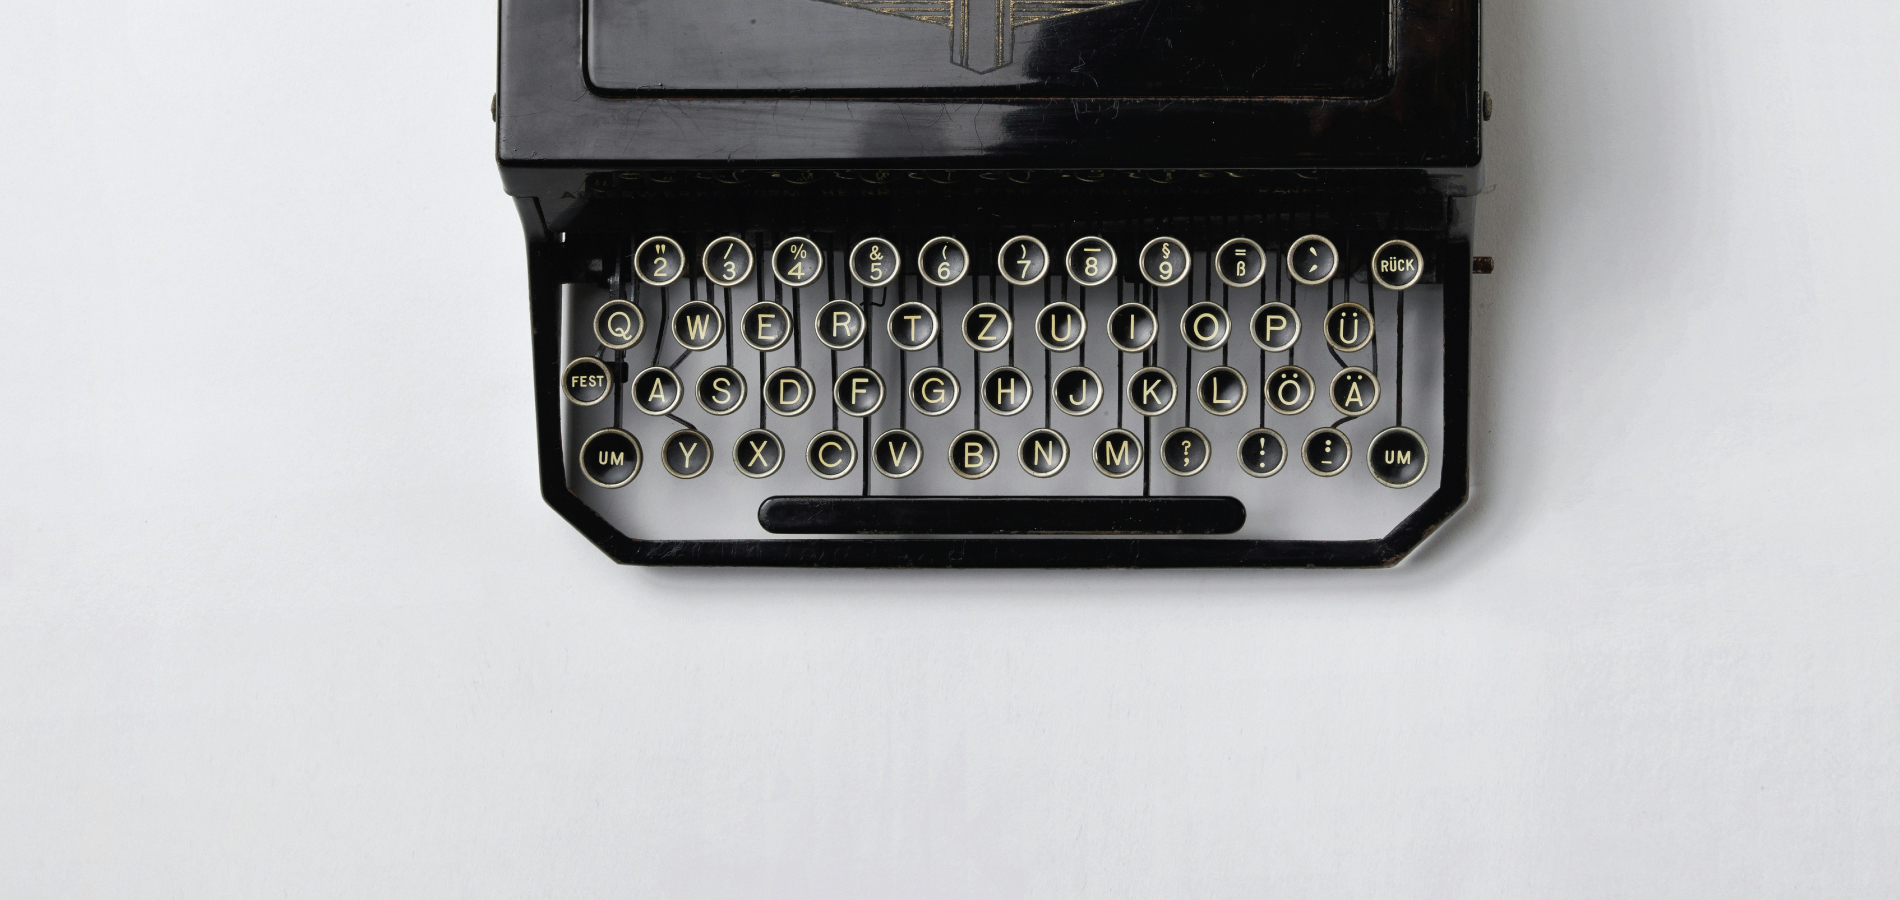 black and white image of a typewriter